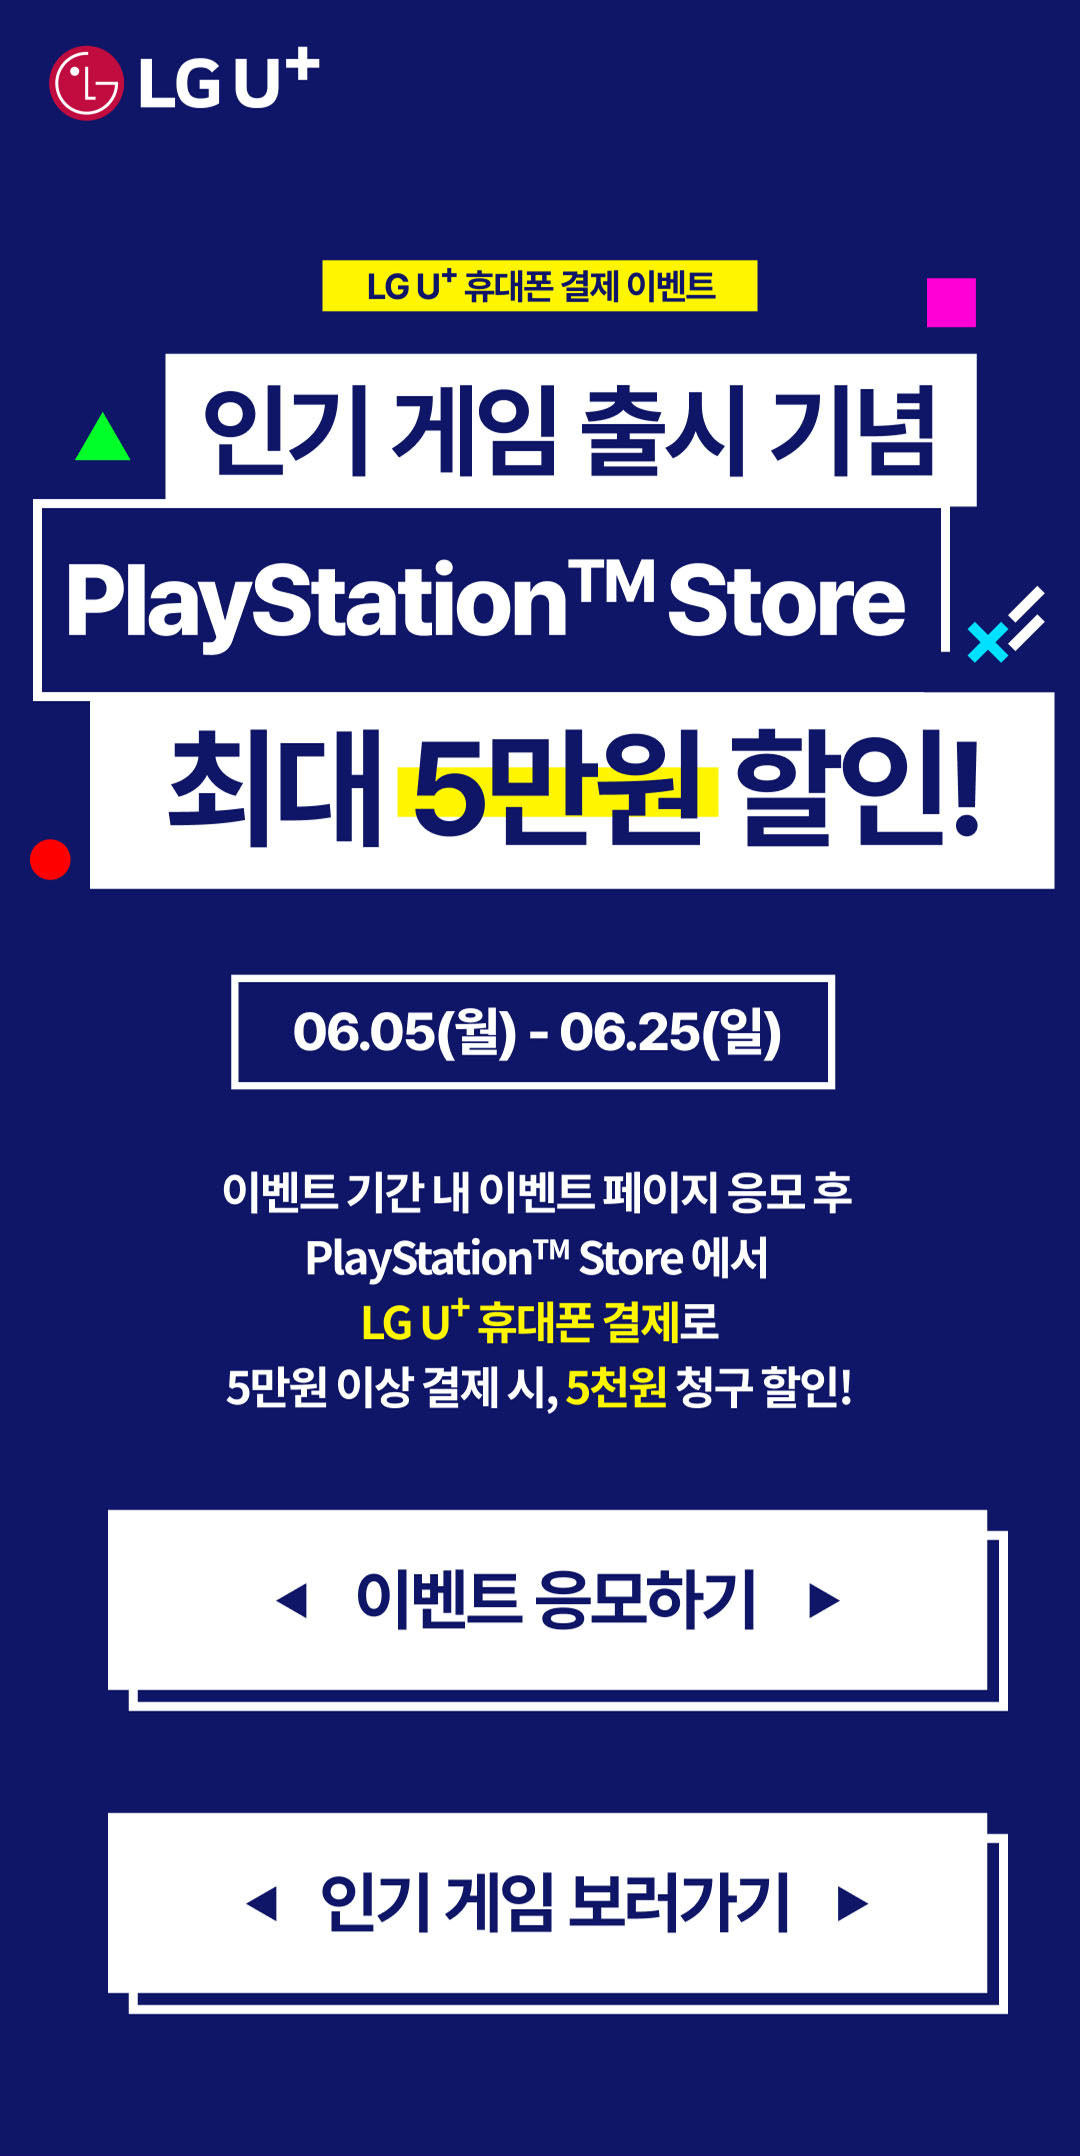 LG U+ 휴대폰 결제 이벤트 인기 게임 출시 기념 PlayStation Store 최대 5만원 할인